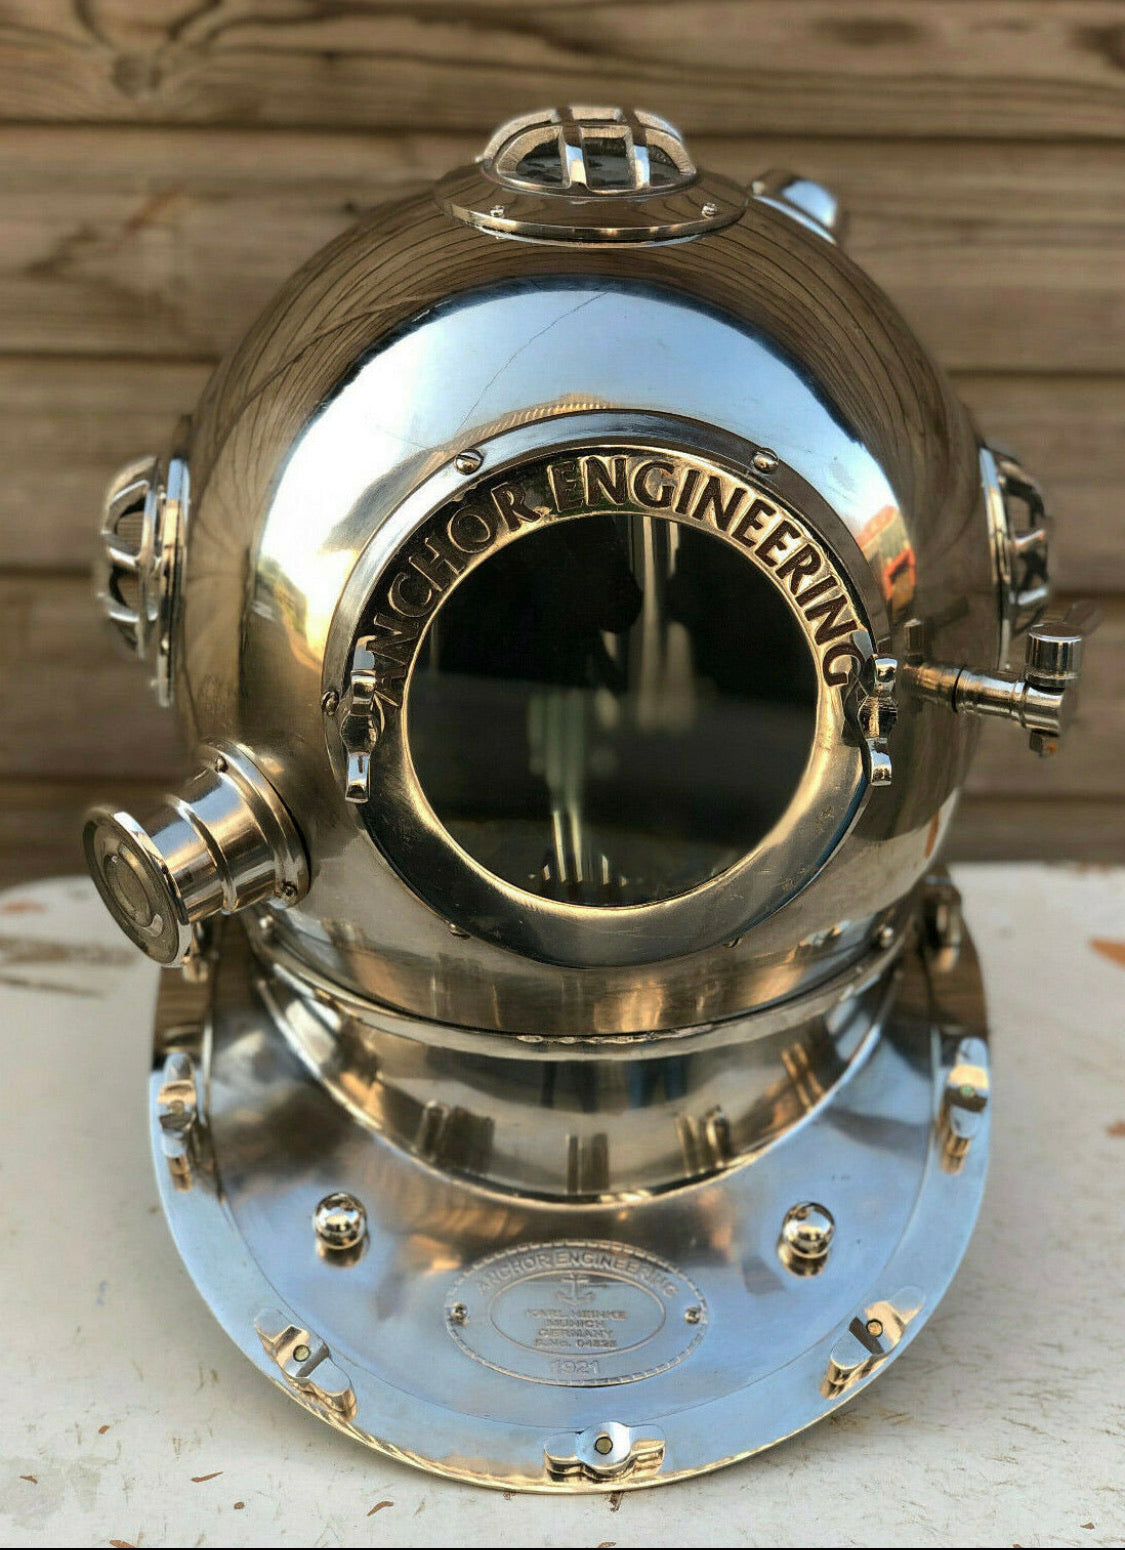 Beautiful Silver Anchor Diving / Divers Helmet.